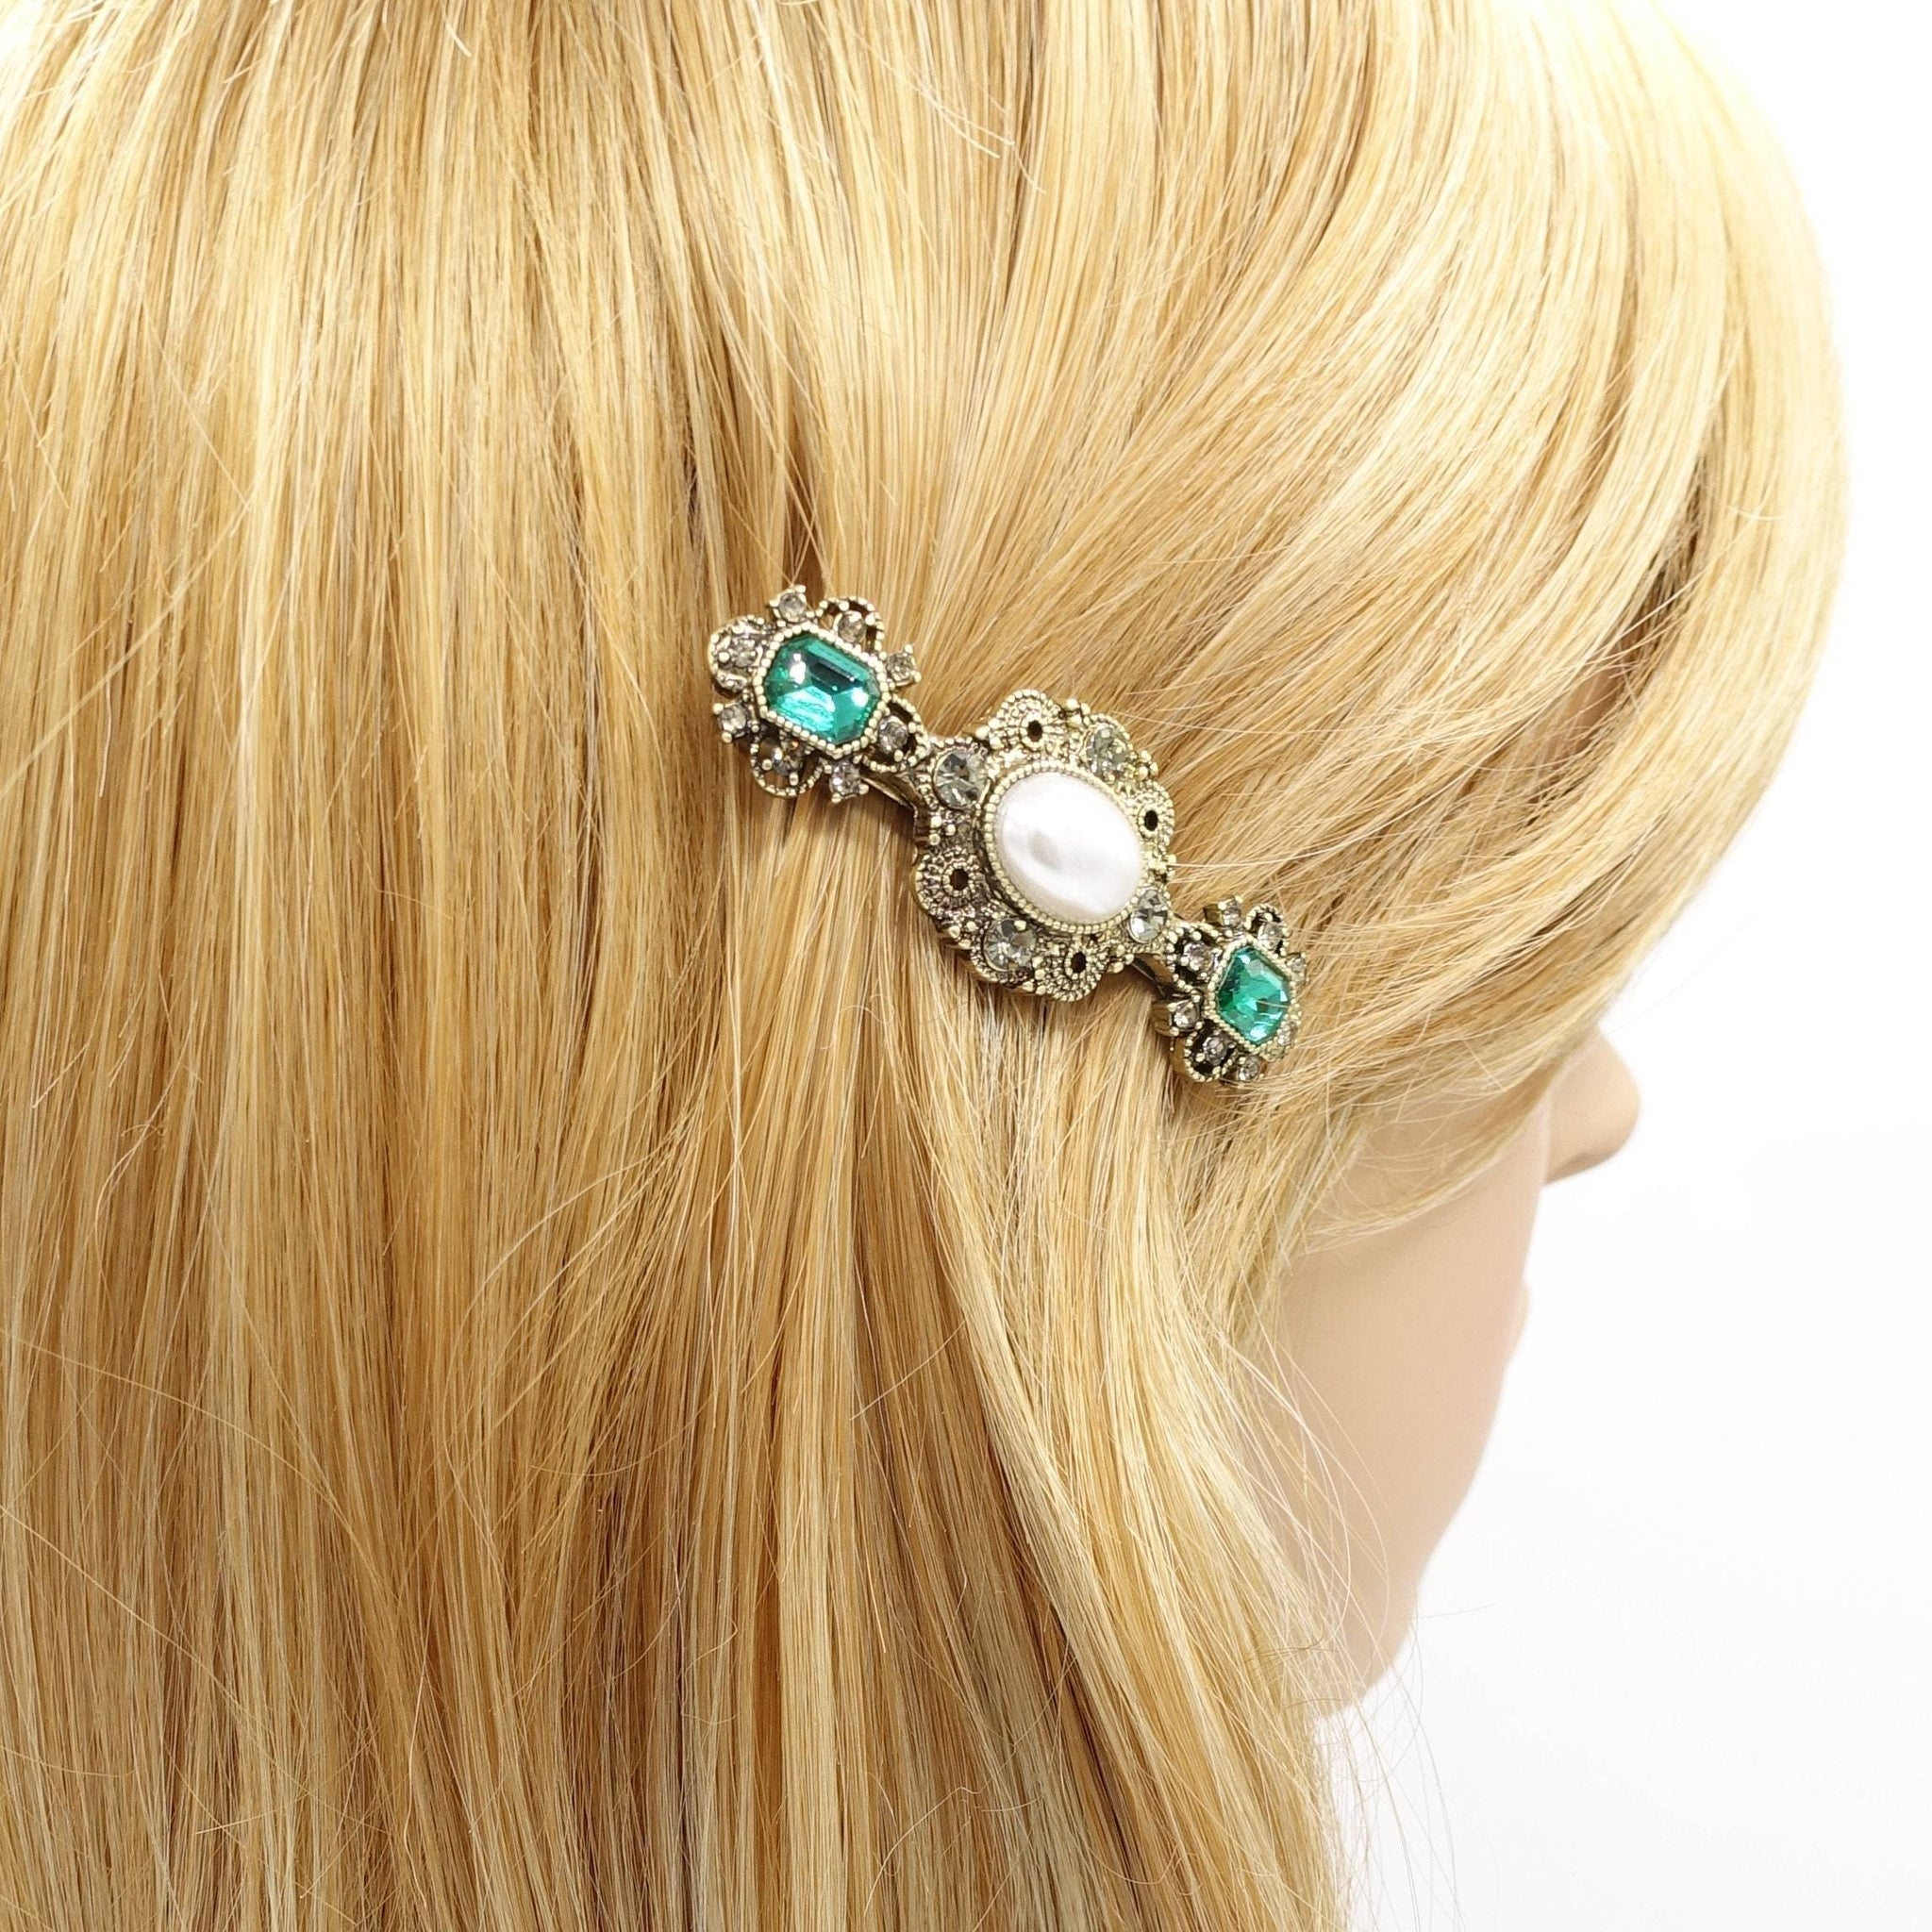 VeryShine antique hair barrette jewel rhinestone baroque style hair accessory for women